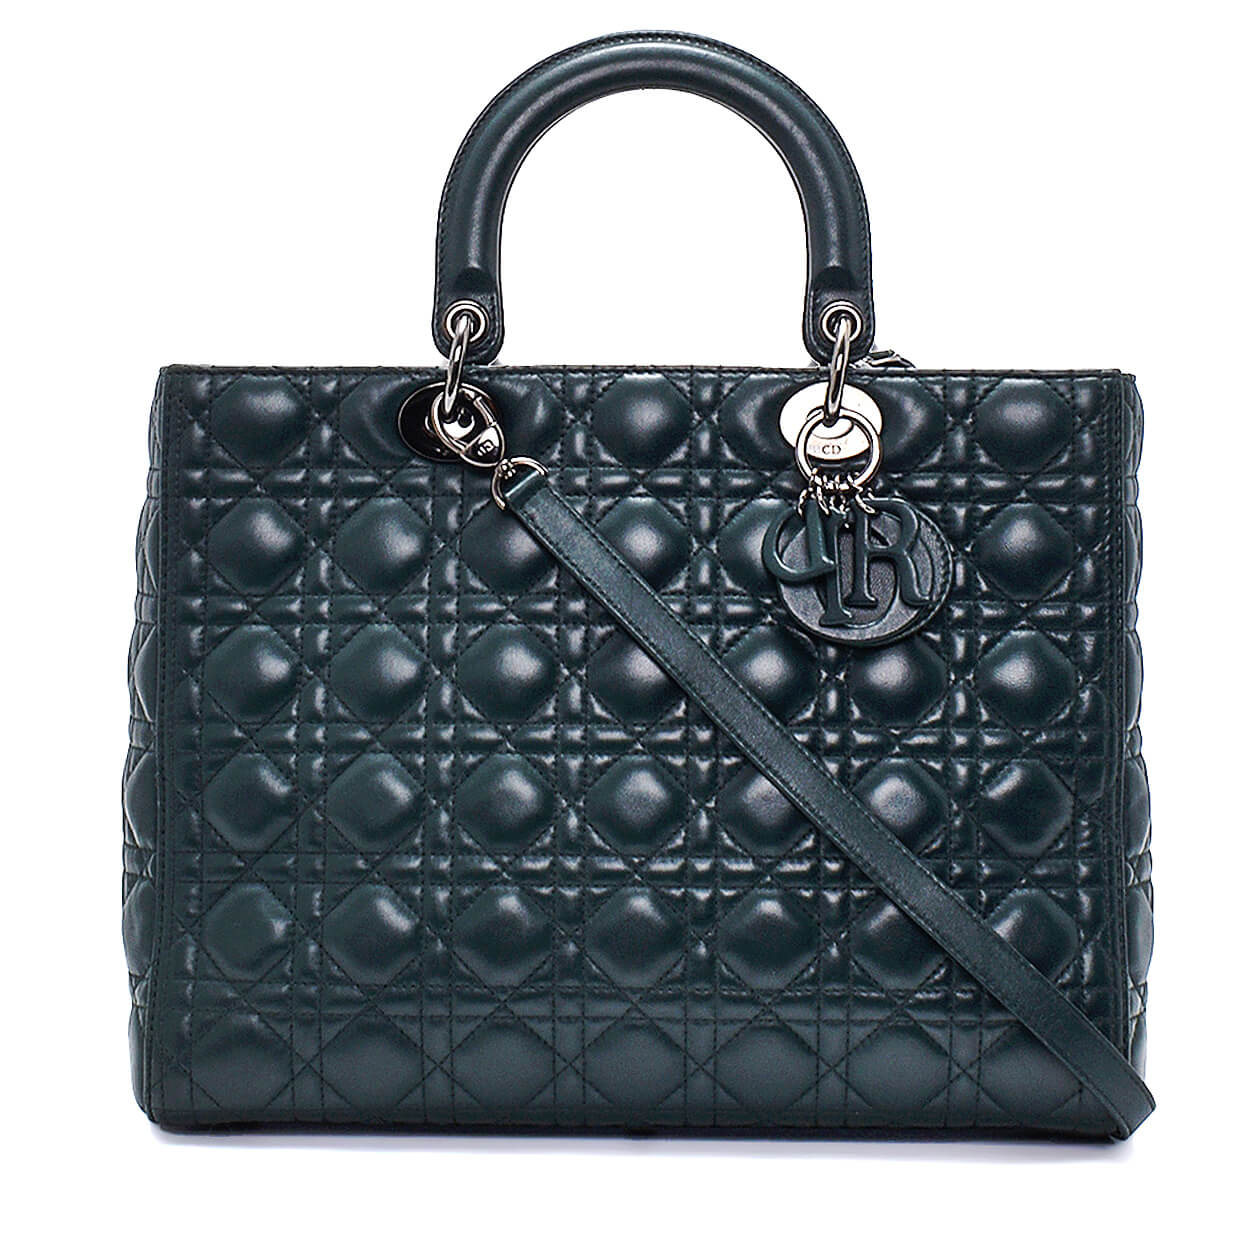 Christian Dior - Dark Green Cannage Leather Lady Dior Large Bag